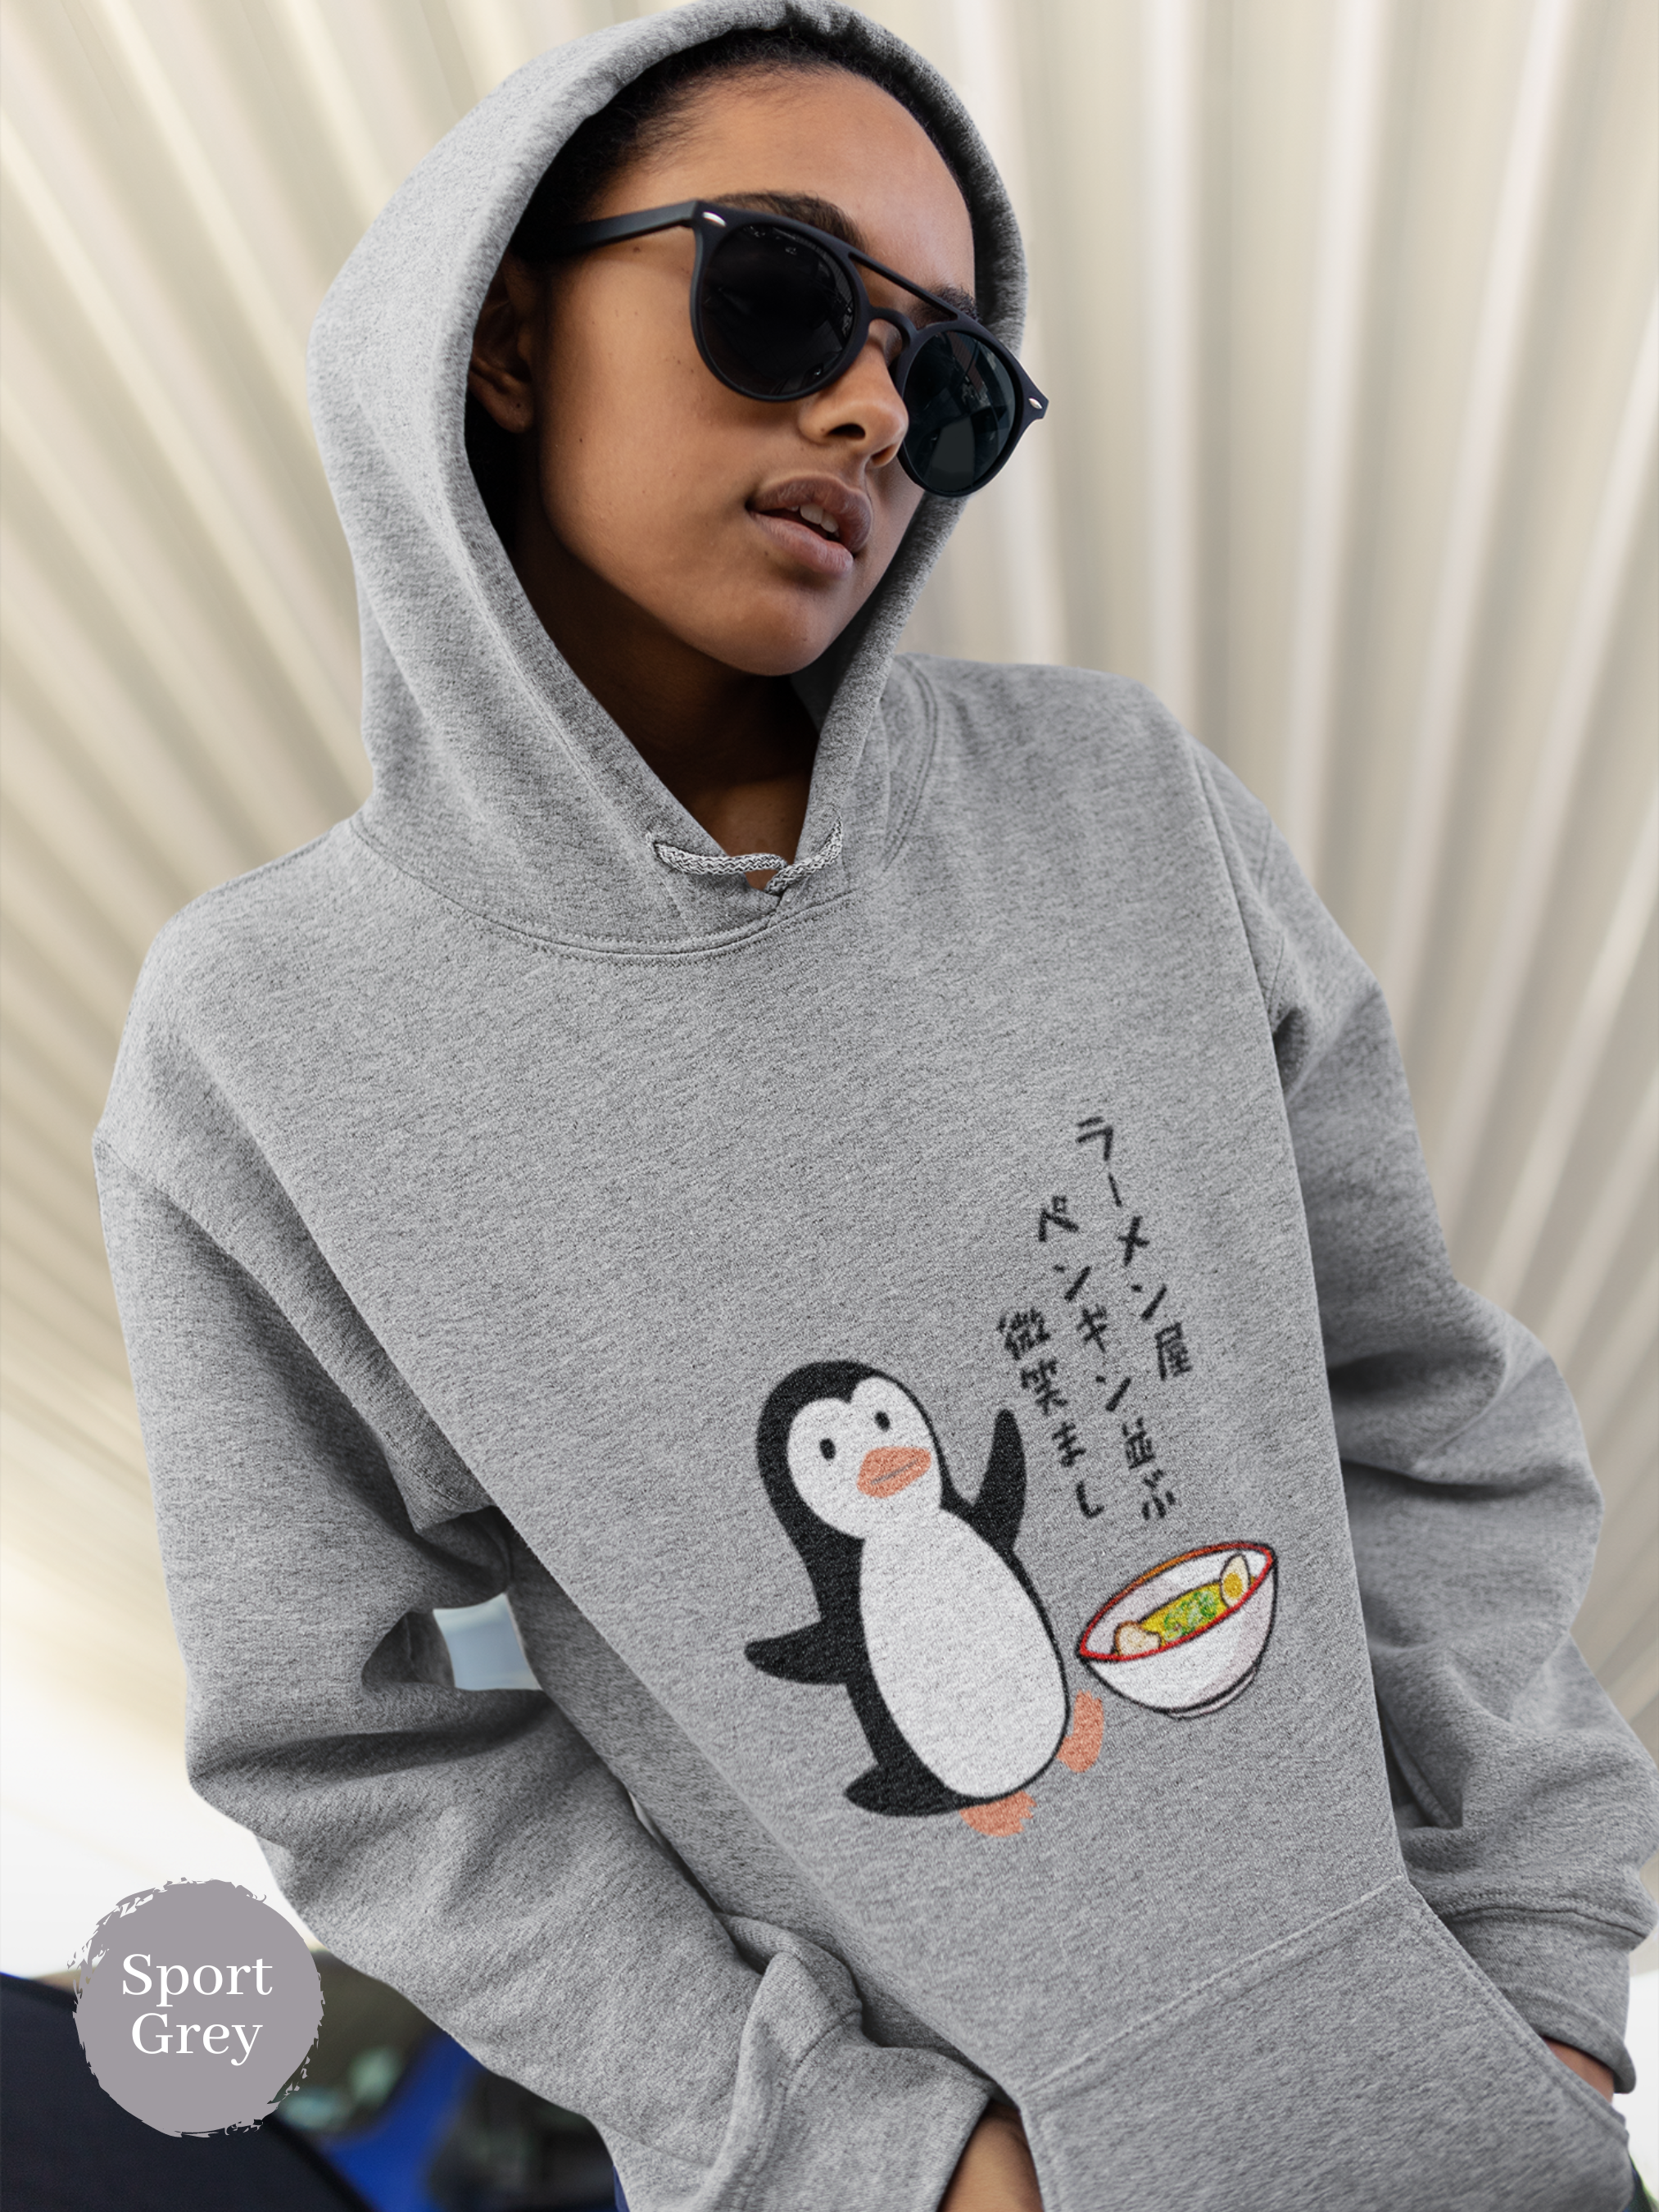 Ramen Hoodie: Serene Penguin Encounter - Haiku-inspired Asian Food Hoodie with Penguin and Ramen Art